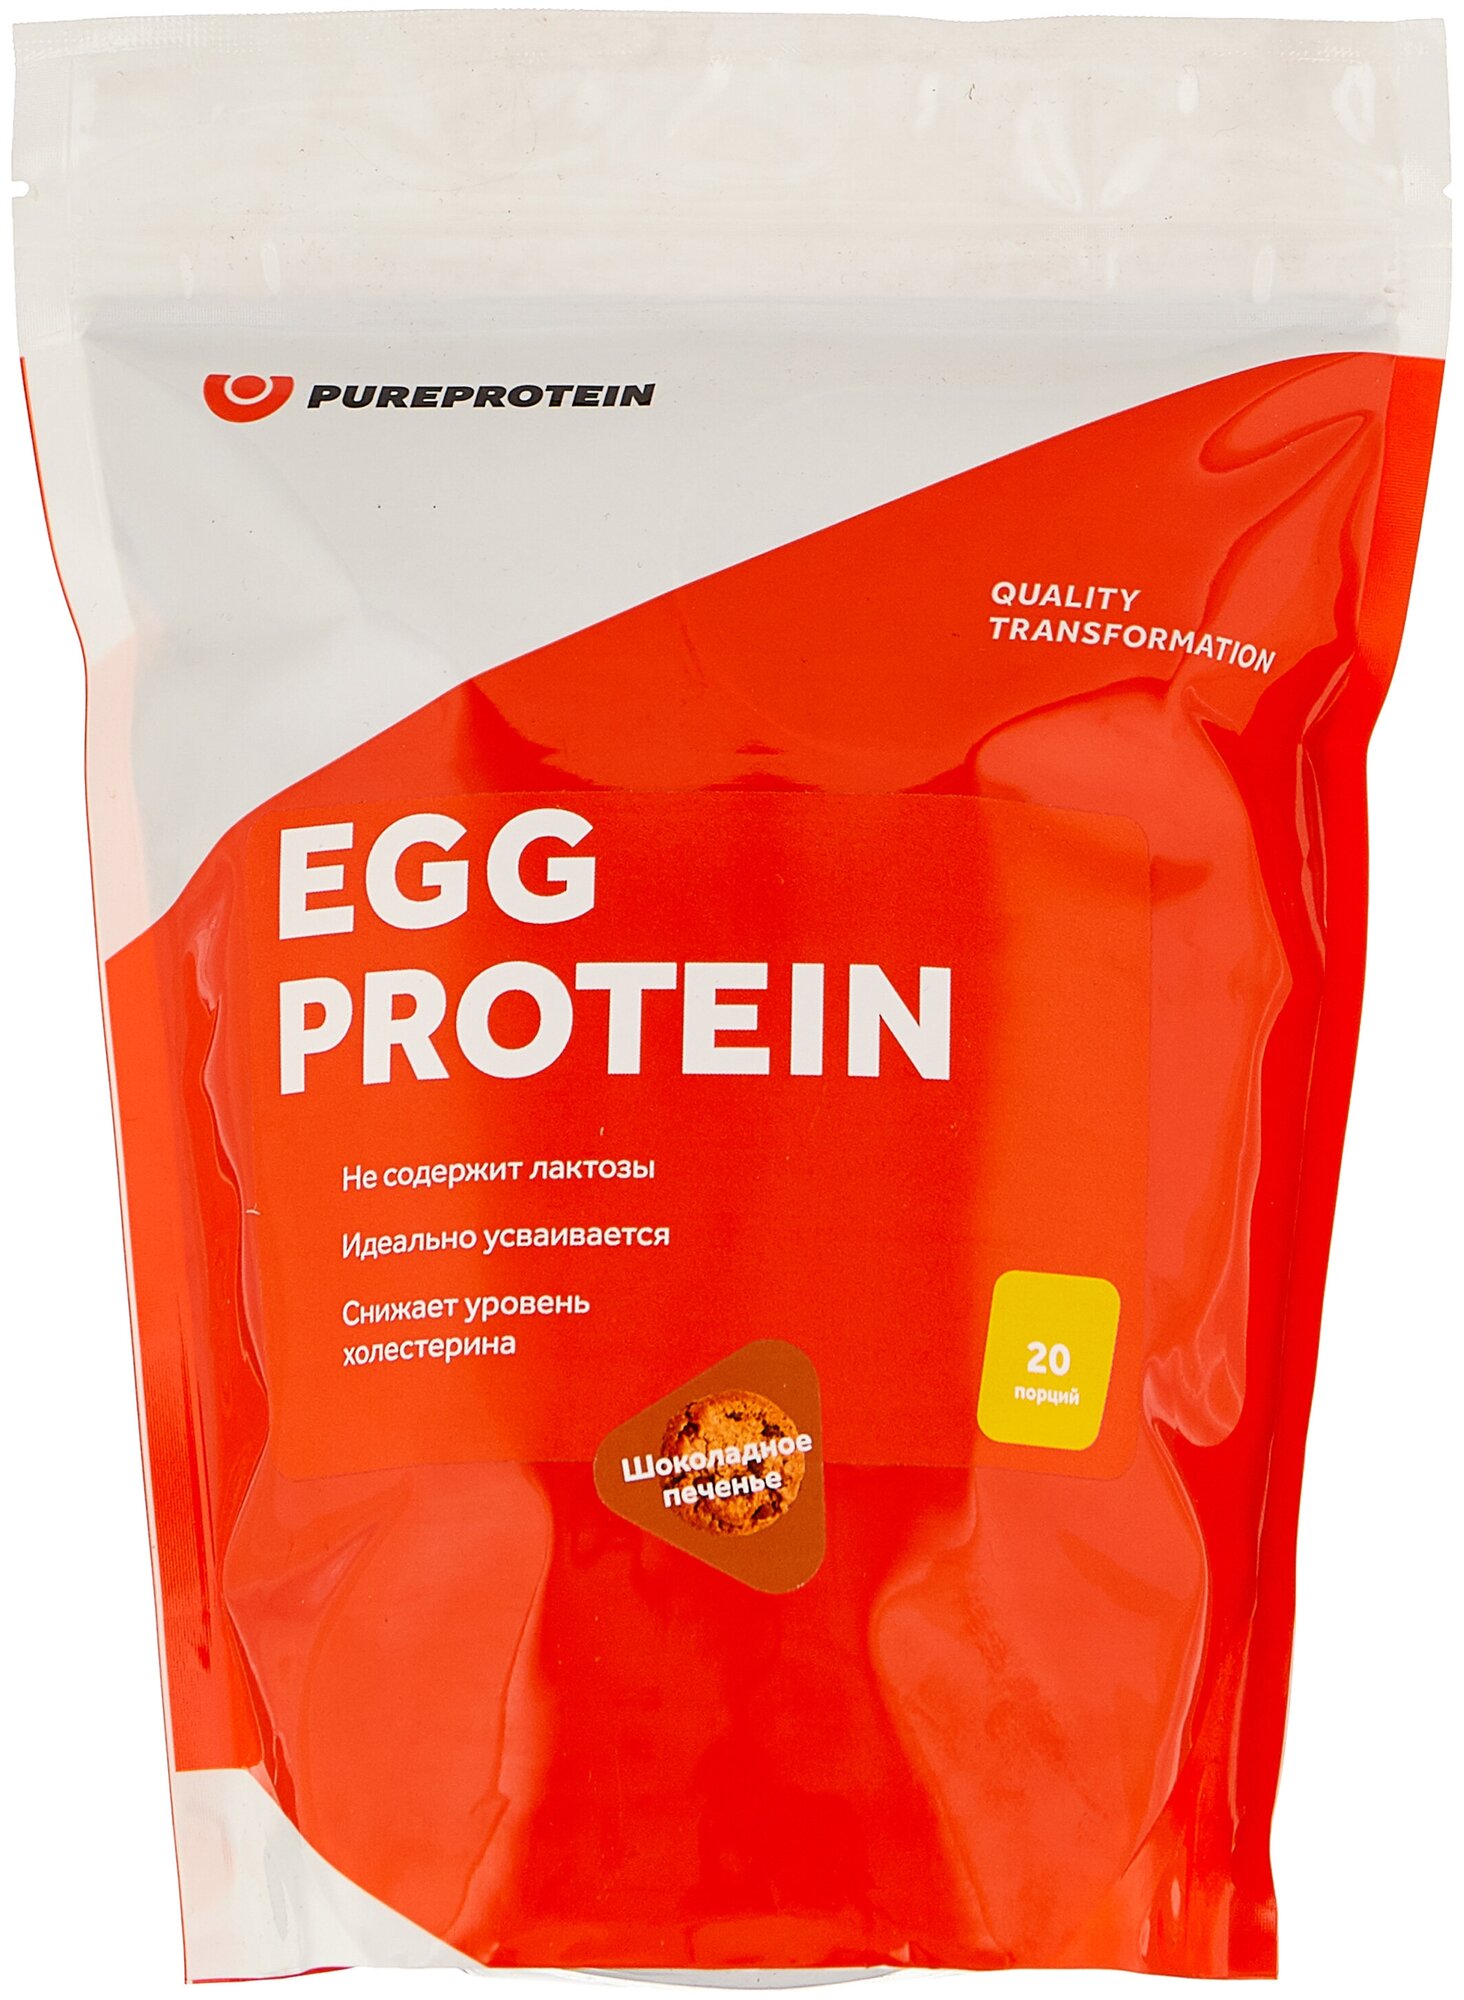 Яичный протеин Egg Protein от PureProtein 600 г : Шоколадное печенье